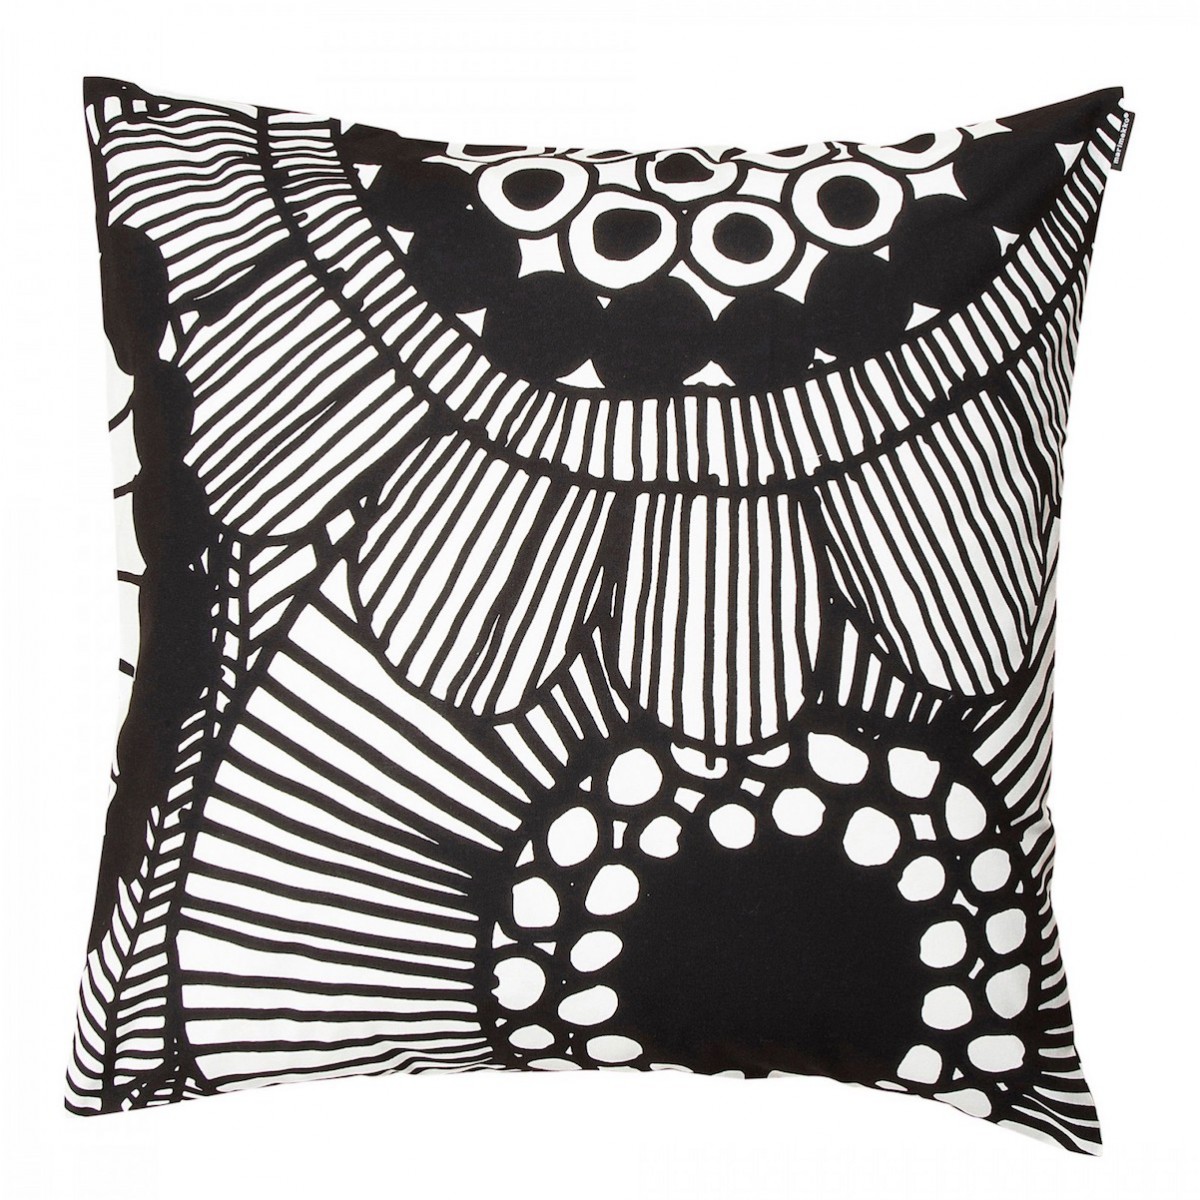 50x50cm - Siirtolapuutarha 190 - Marimekko cushion cover